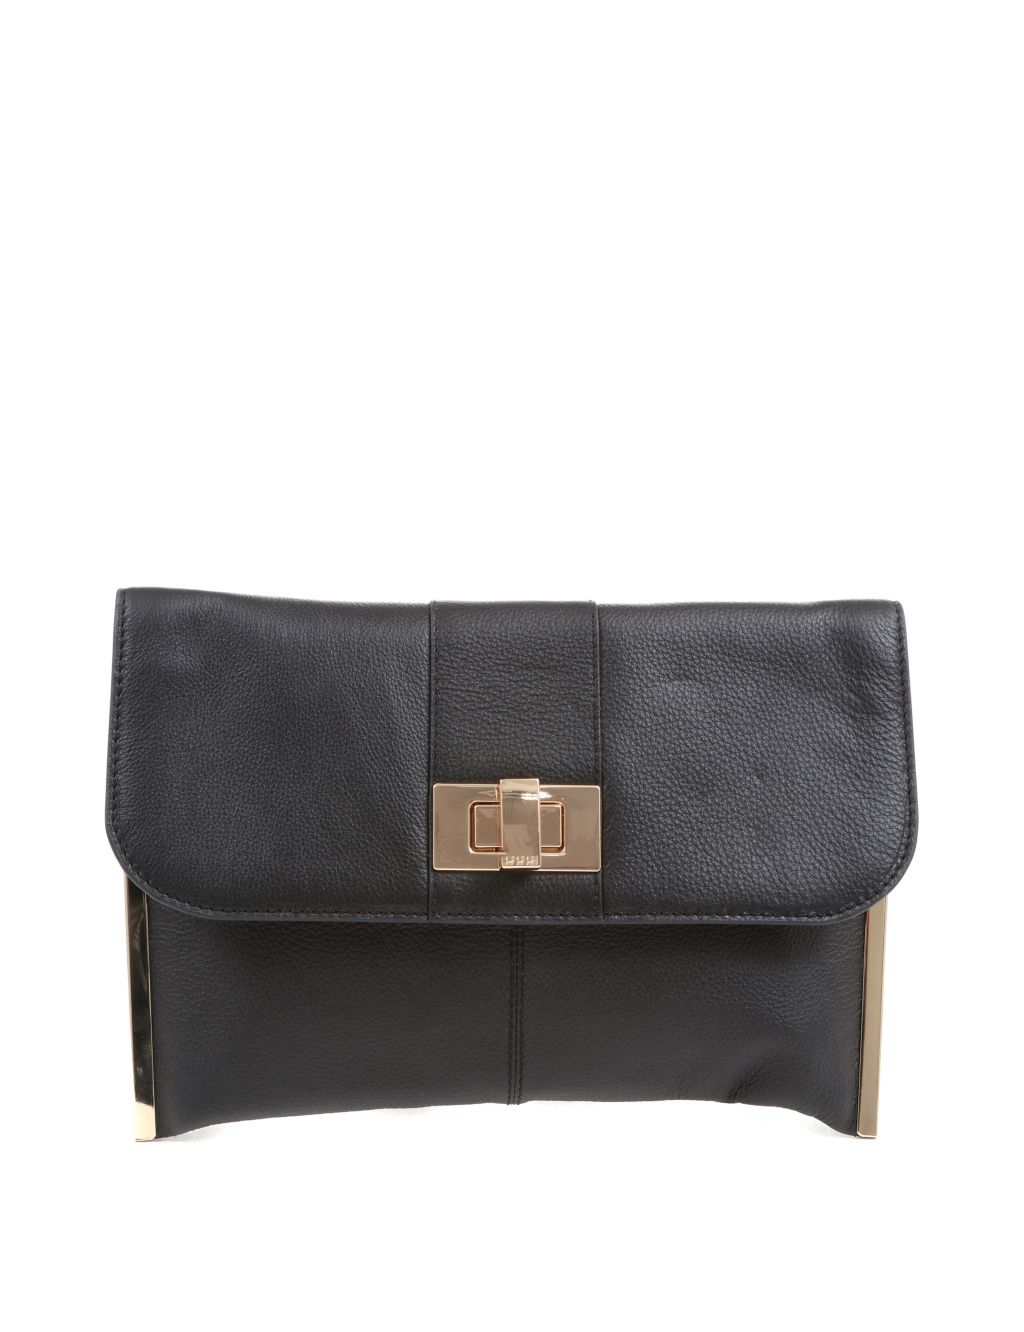 Leather Clutch Bag | Jones Bootmaker | M&S